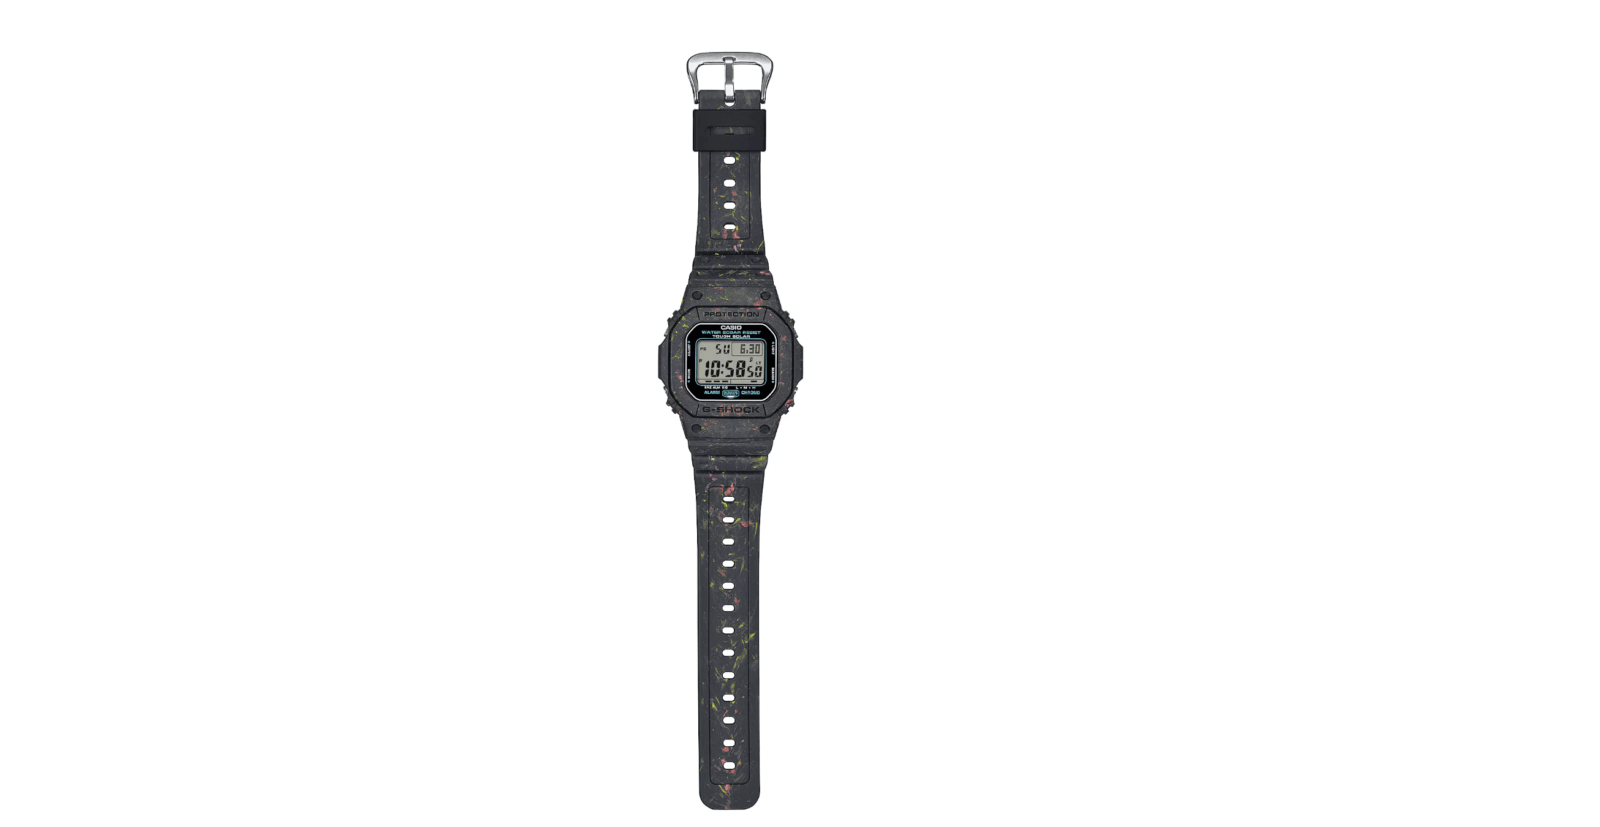 Представлены прочные наручные часы - Casio G-5600BG-1 Limited Edition Watch (5bee22b9764682bee2e916caed7d235ac67544fdff75cc1816401c19c48e5ded 1)